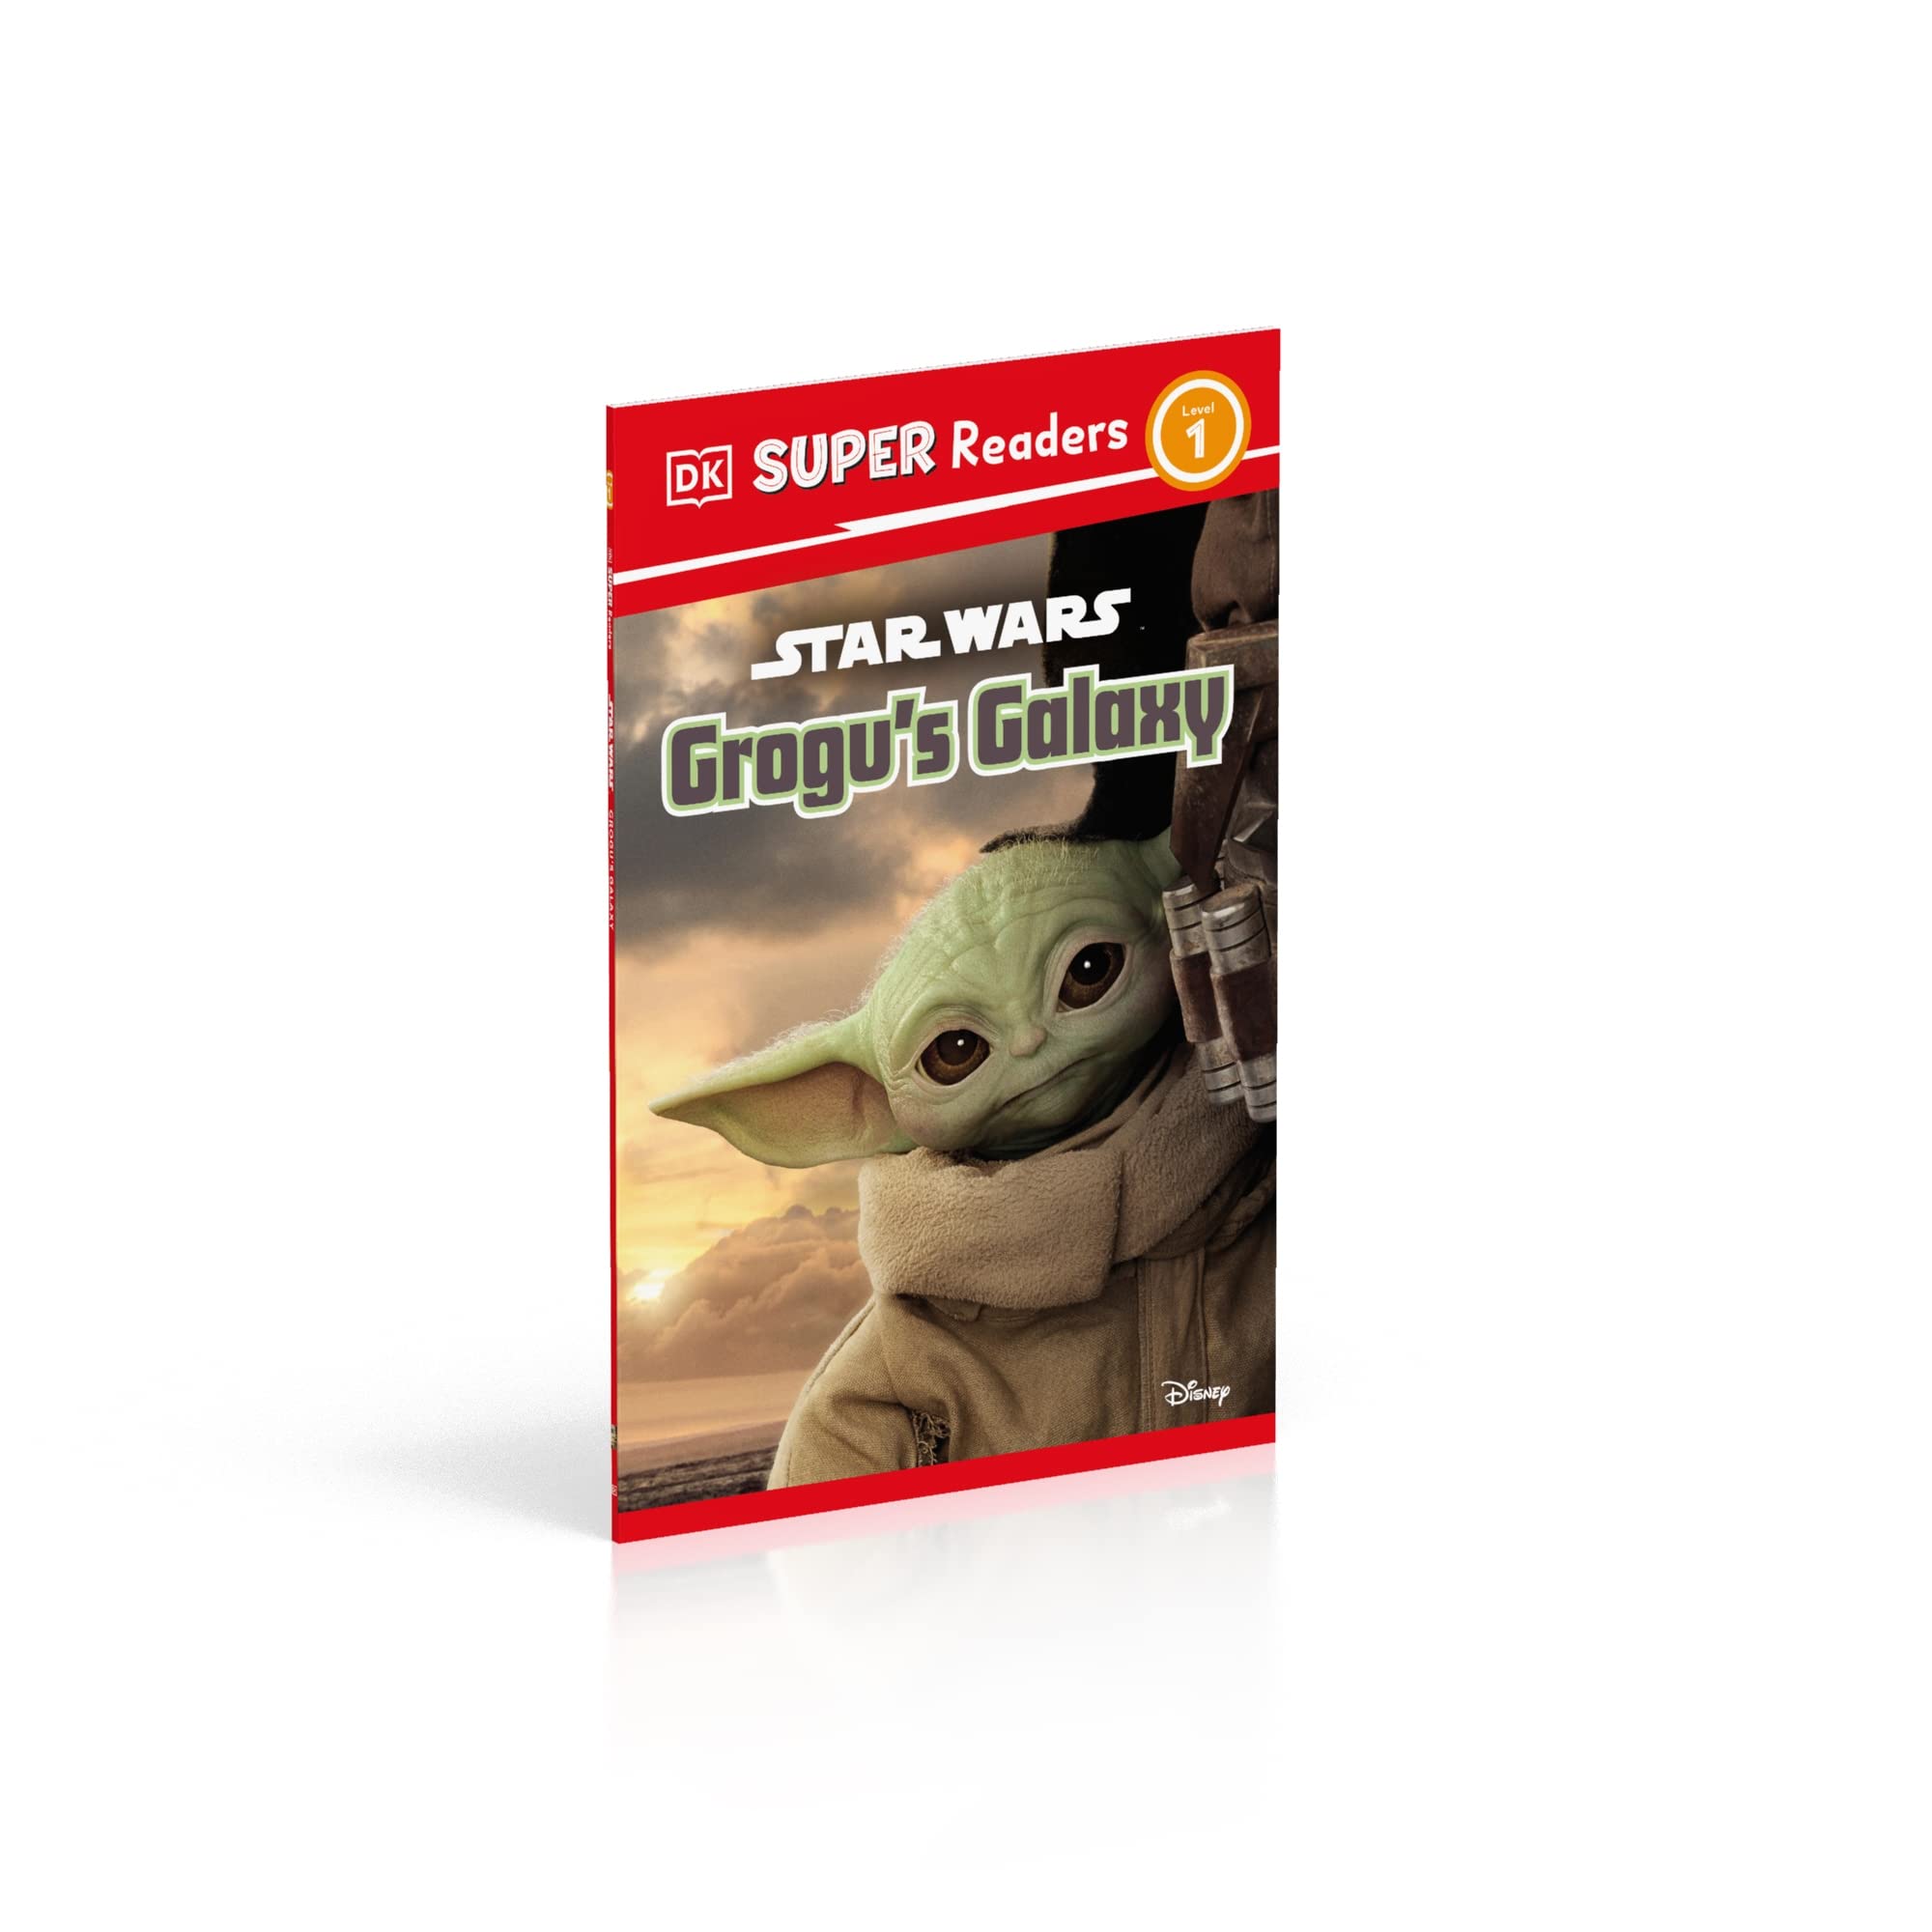 DK Super Readers Level 1 Star Wars Grogu's Galaxy: Meet Mando's New Friend!